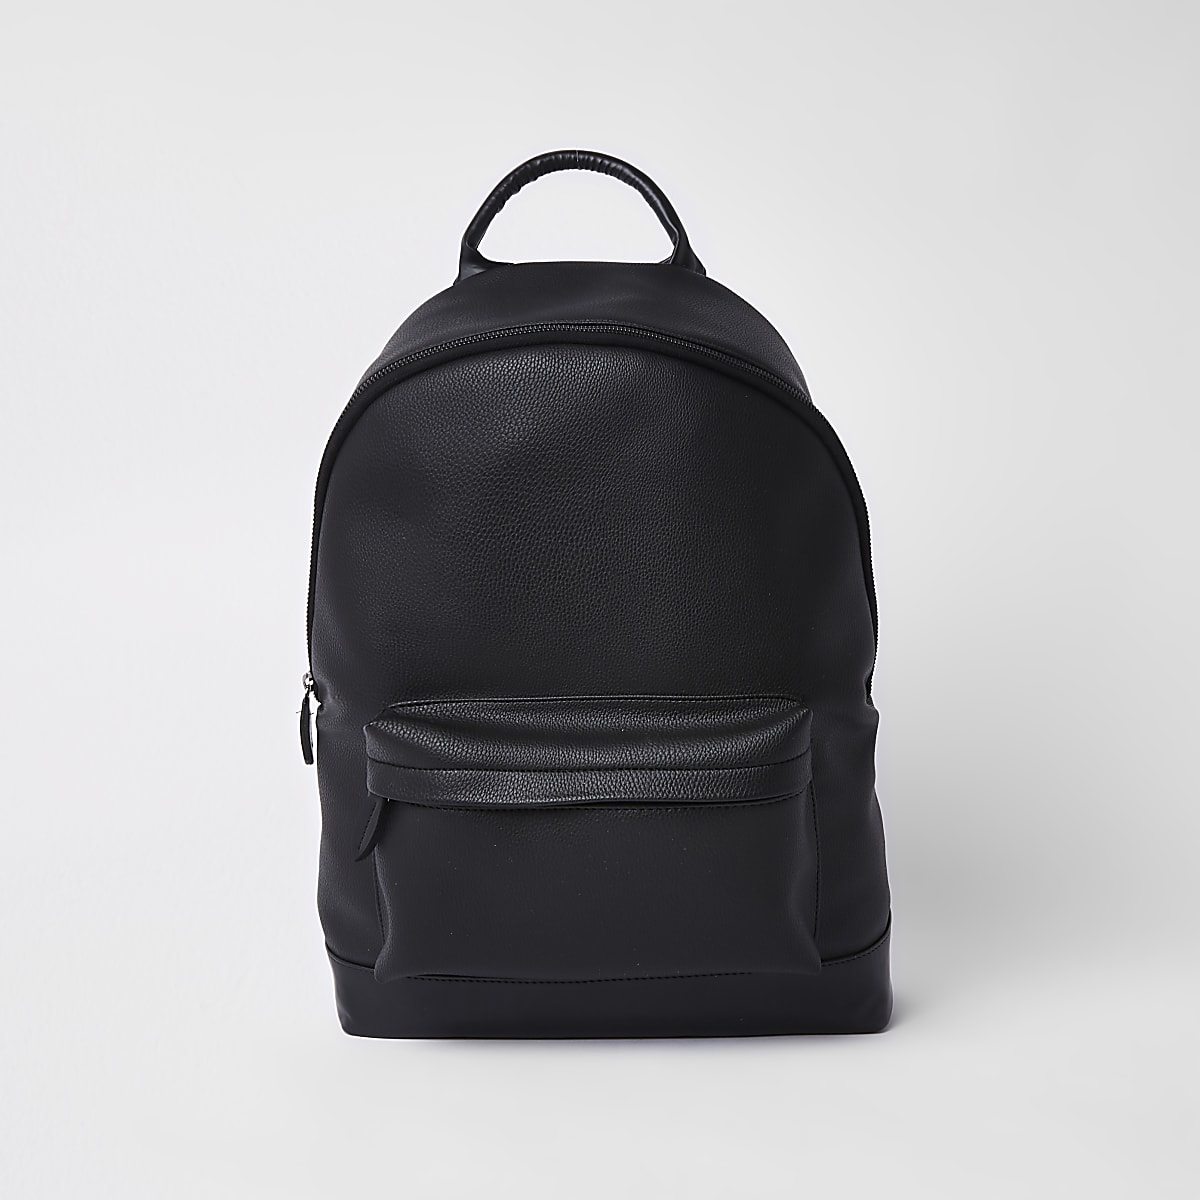 Black faux leather backpack - Backpacks / Rucksacks - Bags - men